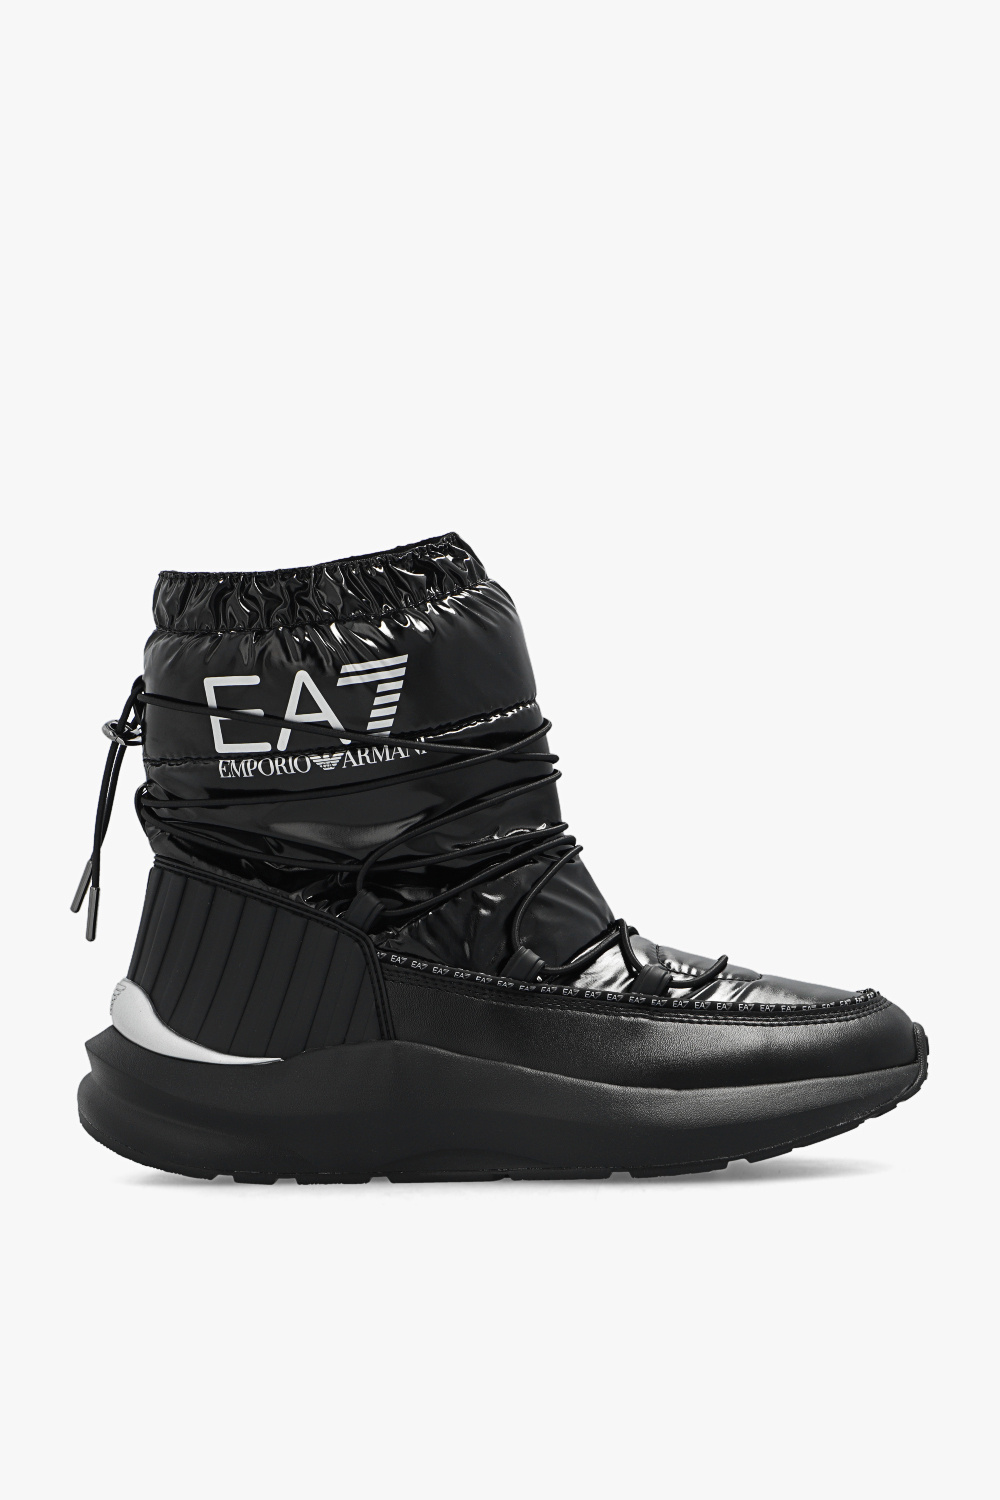 EA7 Emporio Armani Snow boots with logo